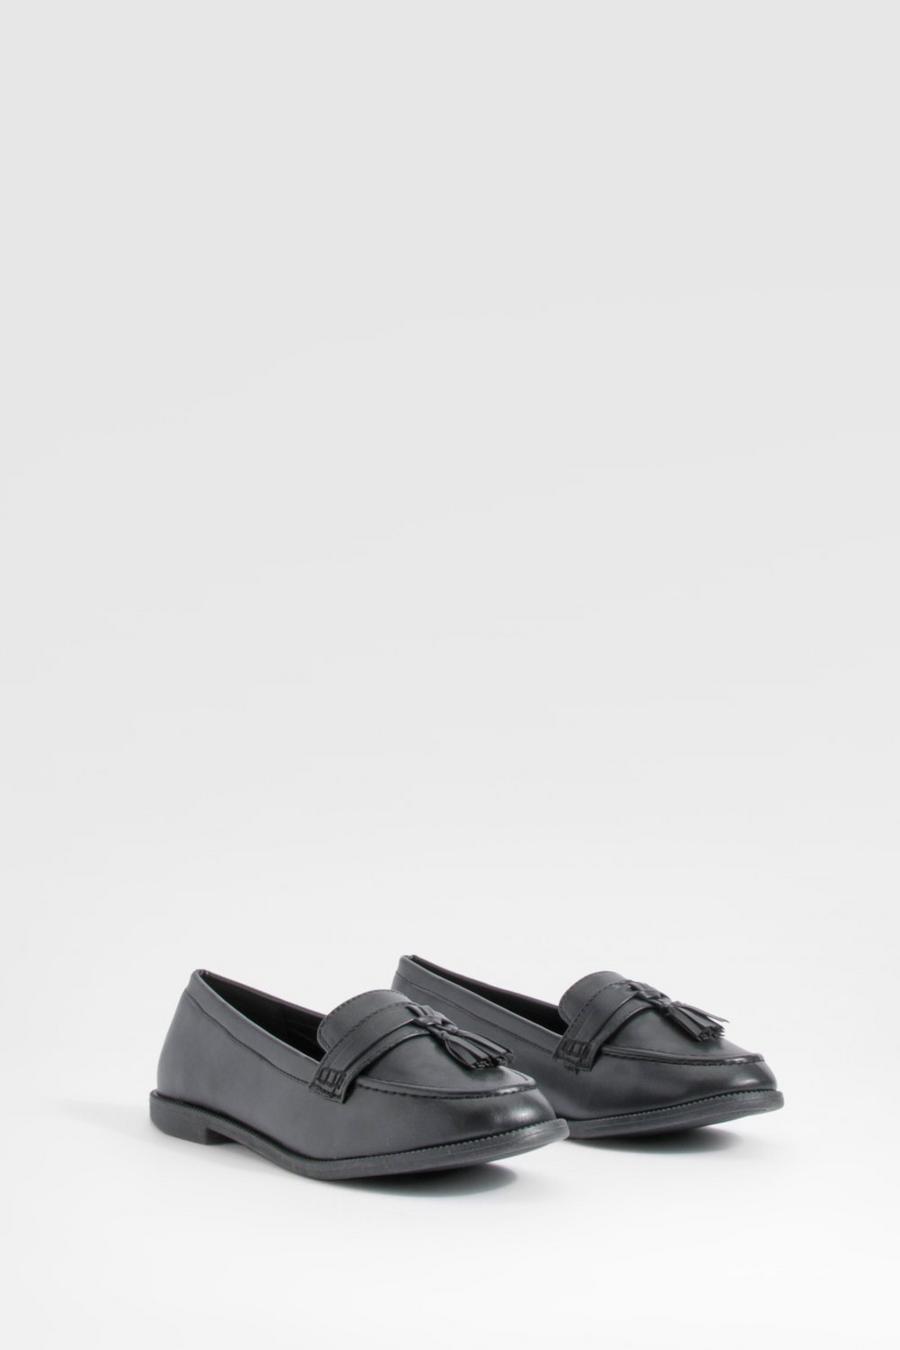 Black Tassel Loafers   